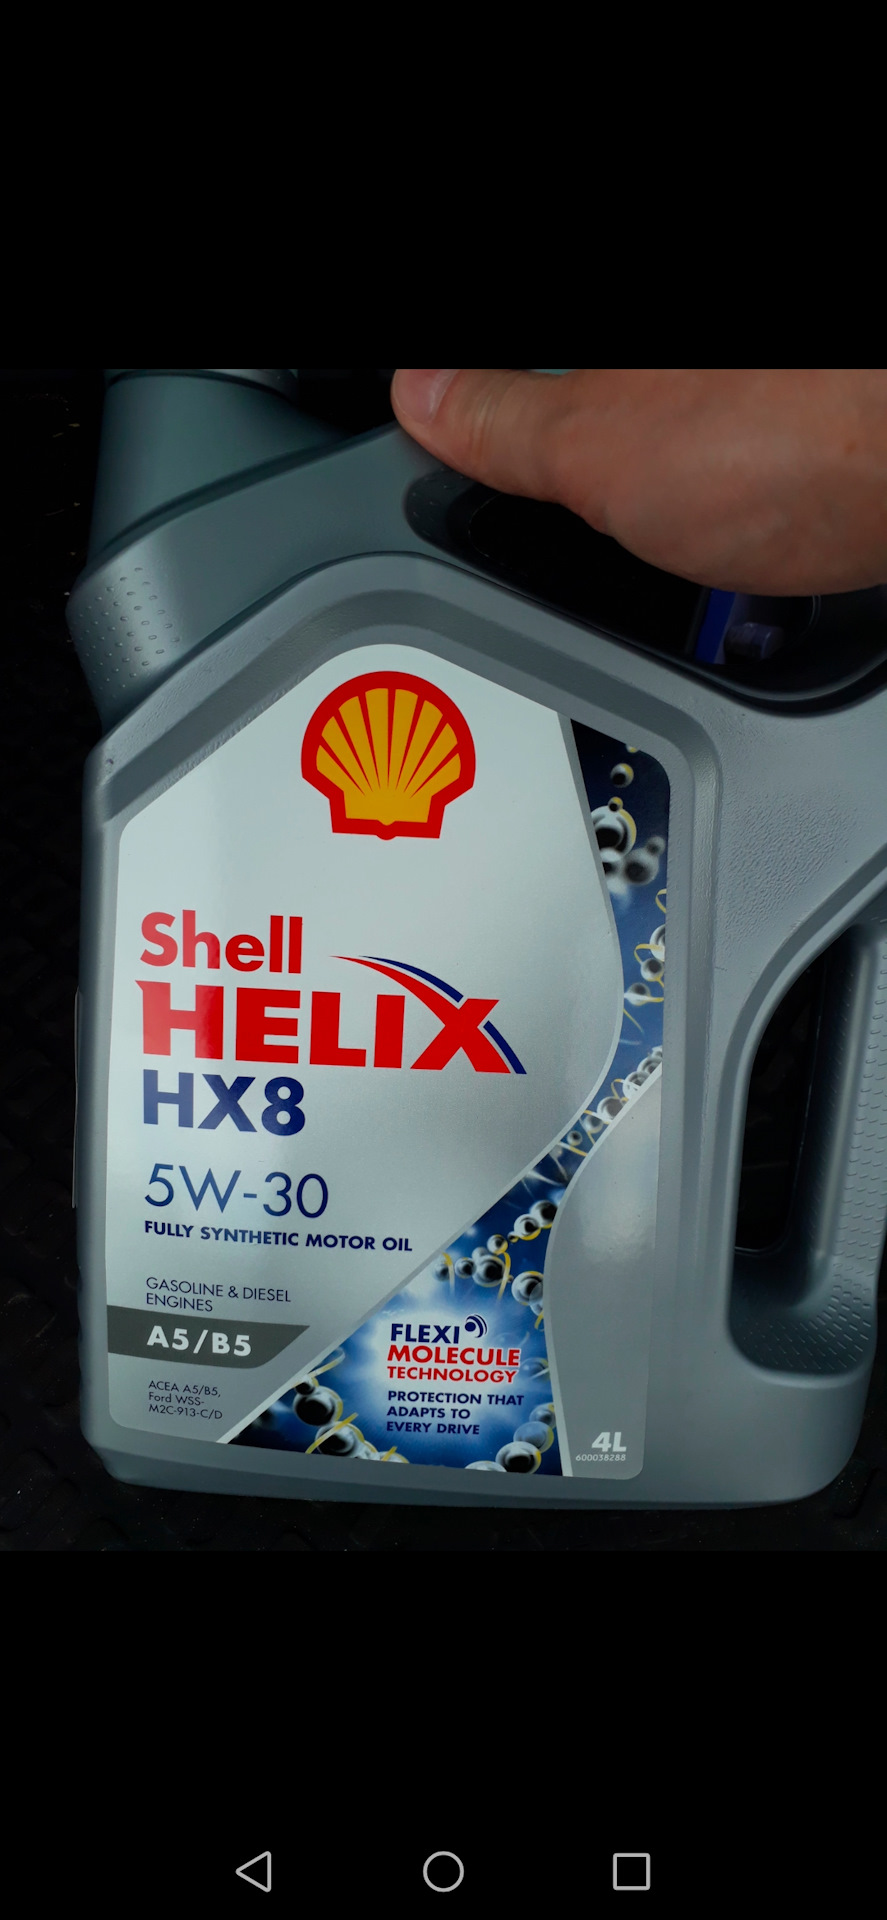 Купить масло а5 в5. Shell hx8 5w30. Shell моторное 5w30 hx8. Шелл Хеликс а5/в5 5w30. Масло Шелл 5w30 hx8.